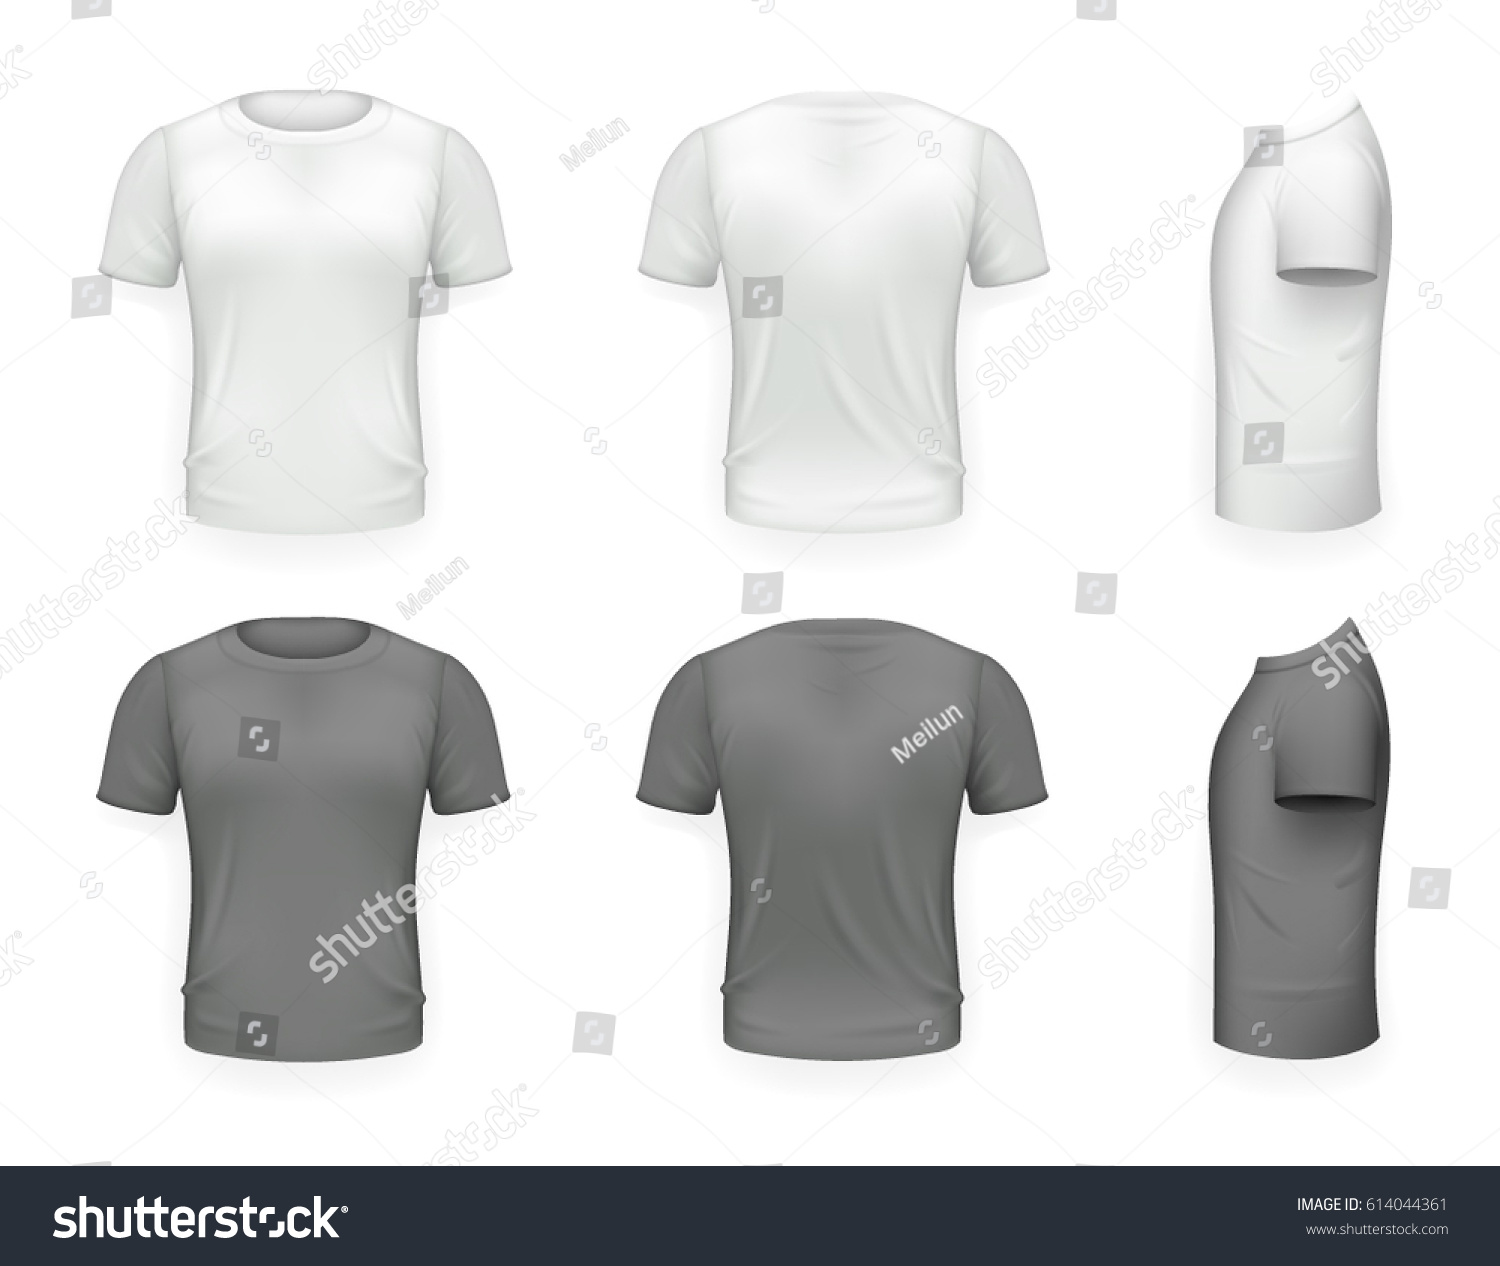 Download Black White Tshirt Front Side Back Stock Vector 614044361 - Shutterstock